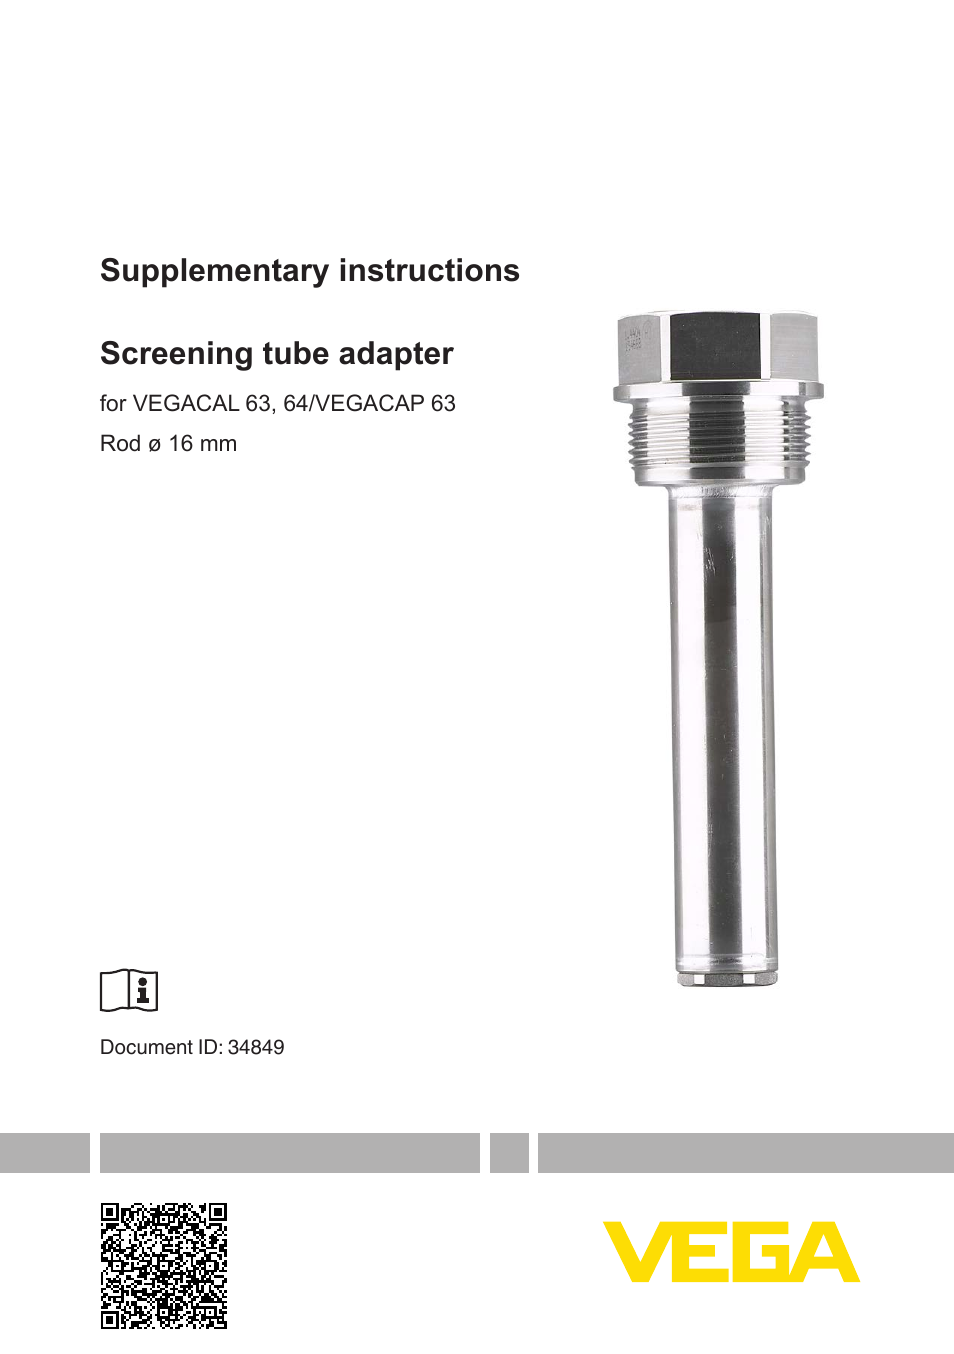 VEGACAP 63 Screening tube adapter Rod ø 16 mm